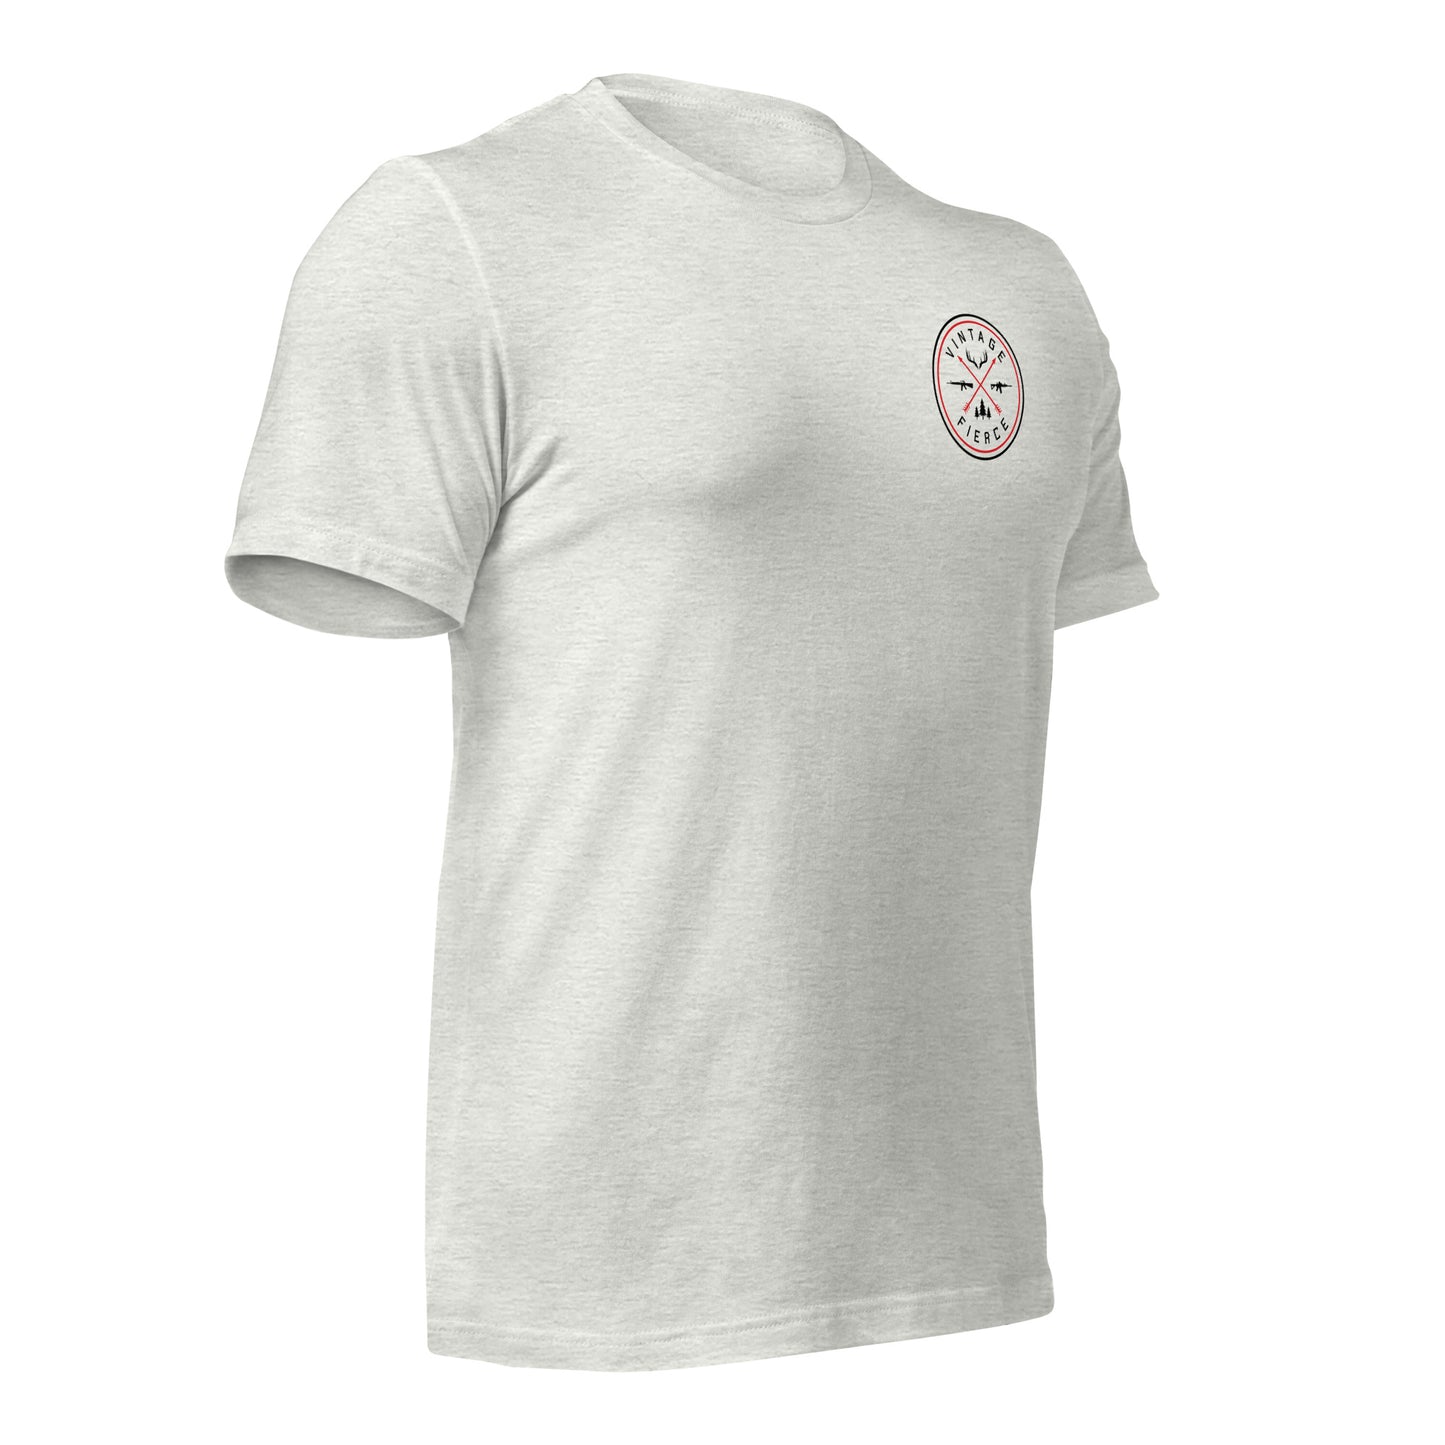 Scar 17-S T-Shirt